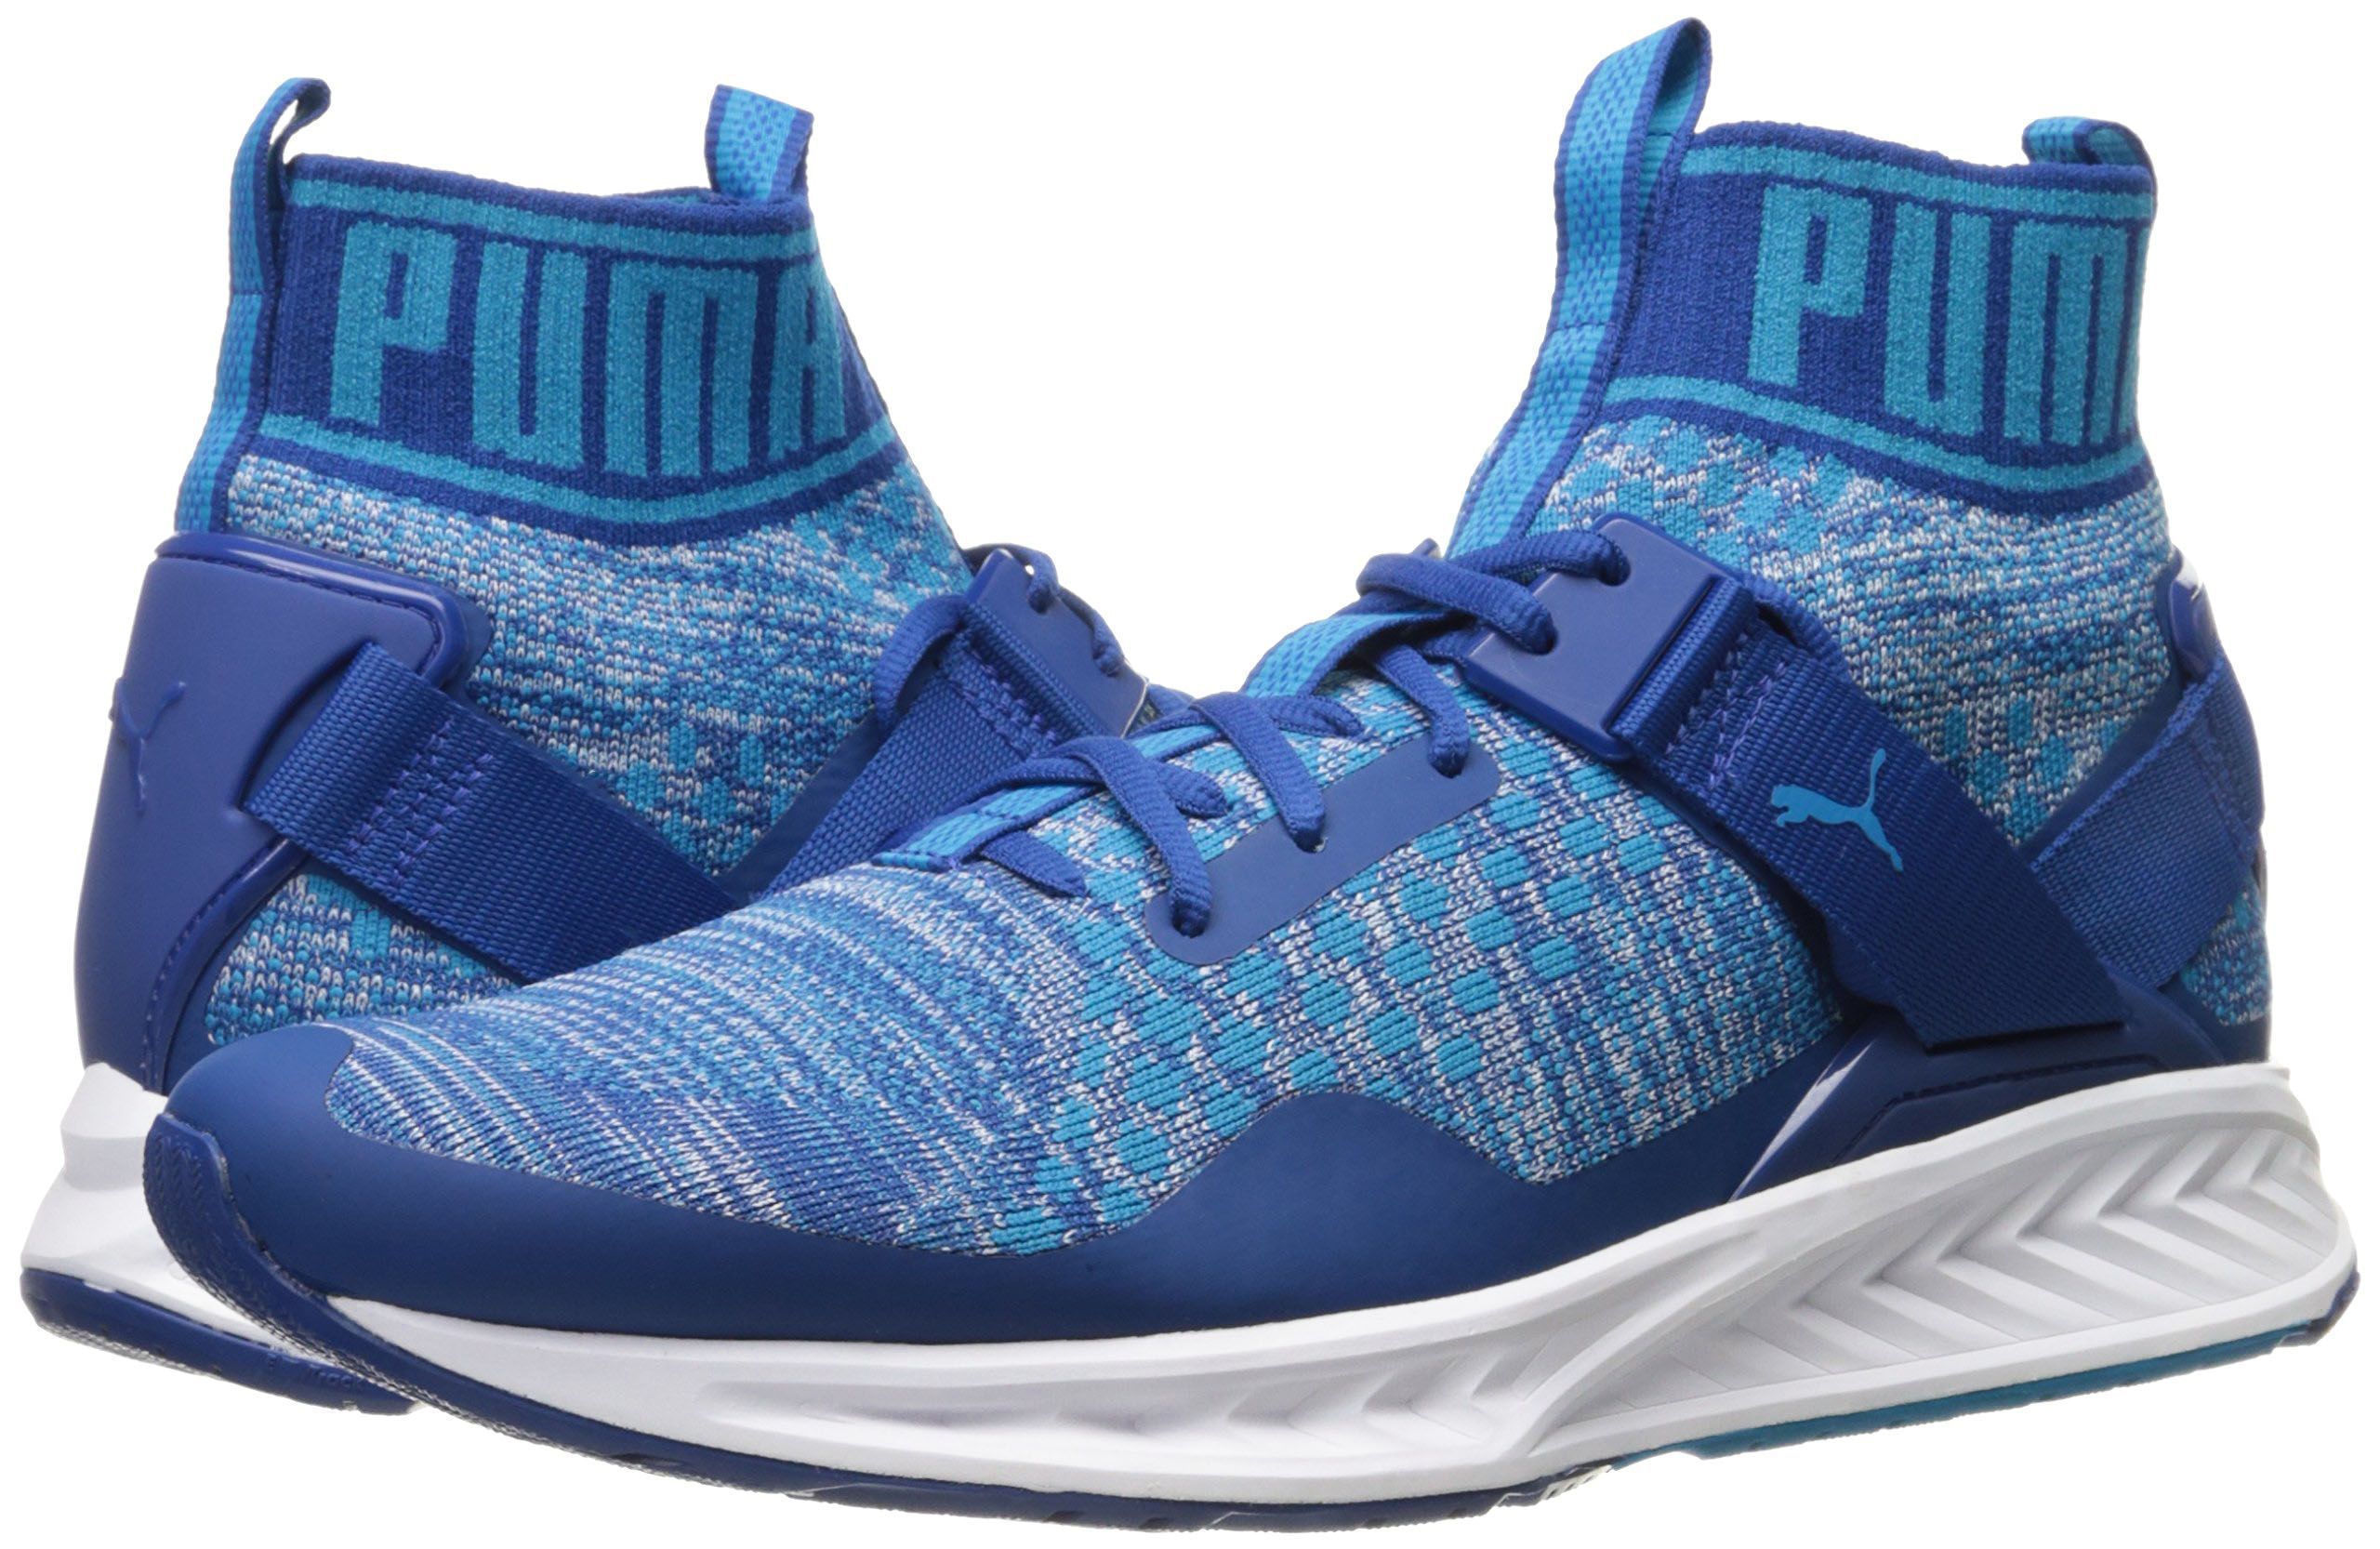 Puma Ignite Evoknit Blue Running Shoes - Buy Puma Ignite Evoknit Blue Running Shoes Online at 